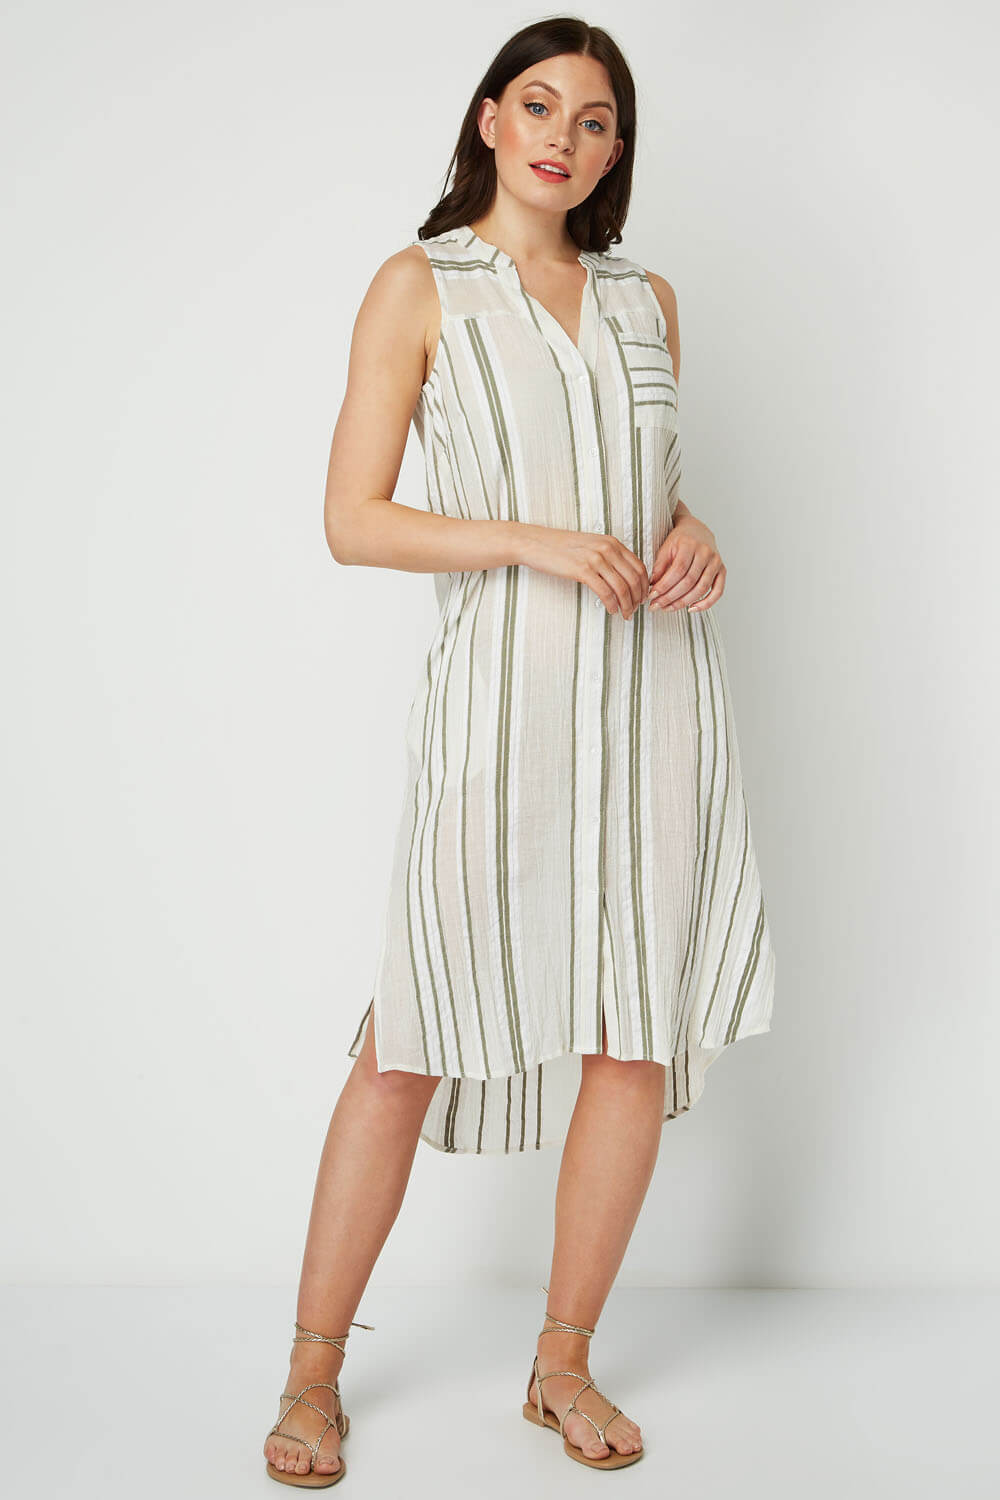 KHAKI Stripe A line Shift Dress , Image 2 of 5